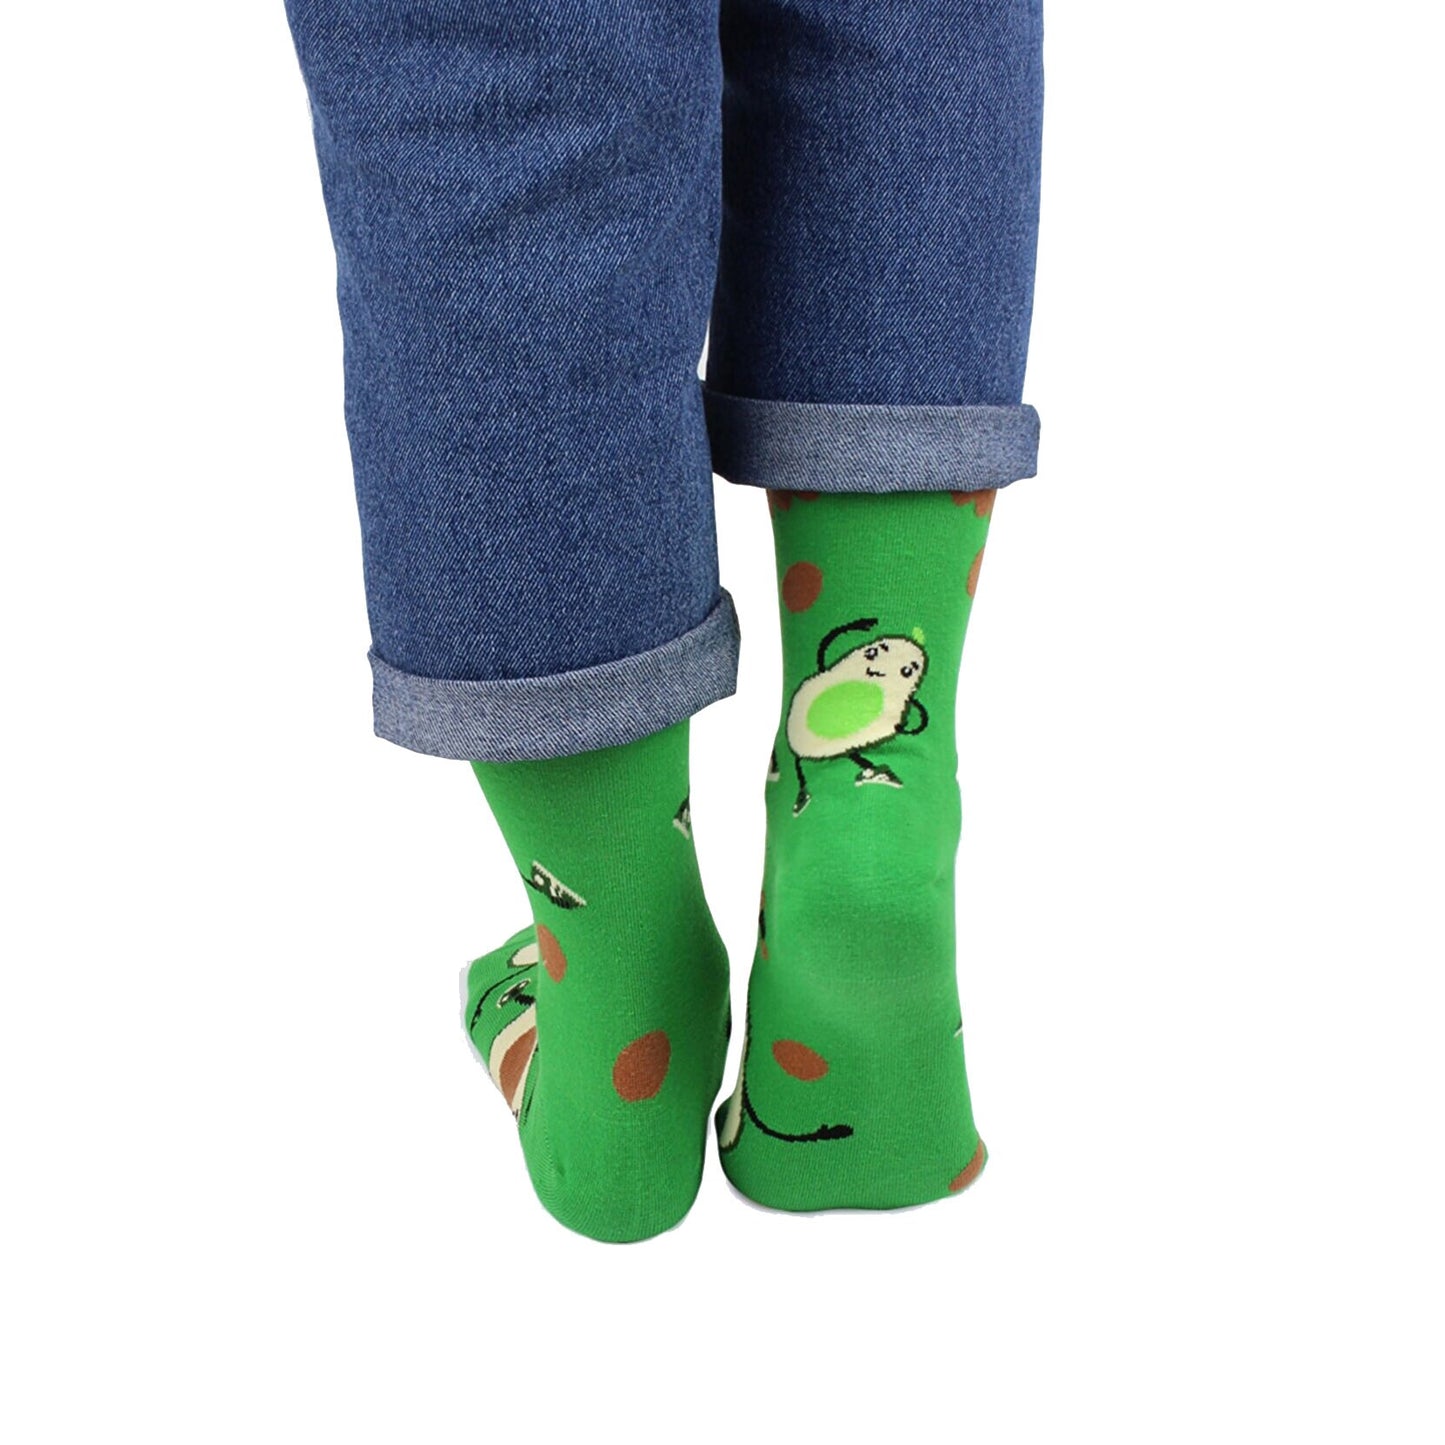 Avocado Socks, Avocado Mismatched Socks, Mismatched Socks, Patterned Socks, Matched Couple Socks, Pregnancy Socks, Mamacado, Socks